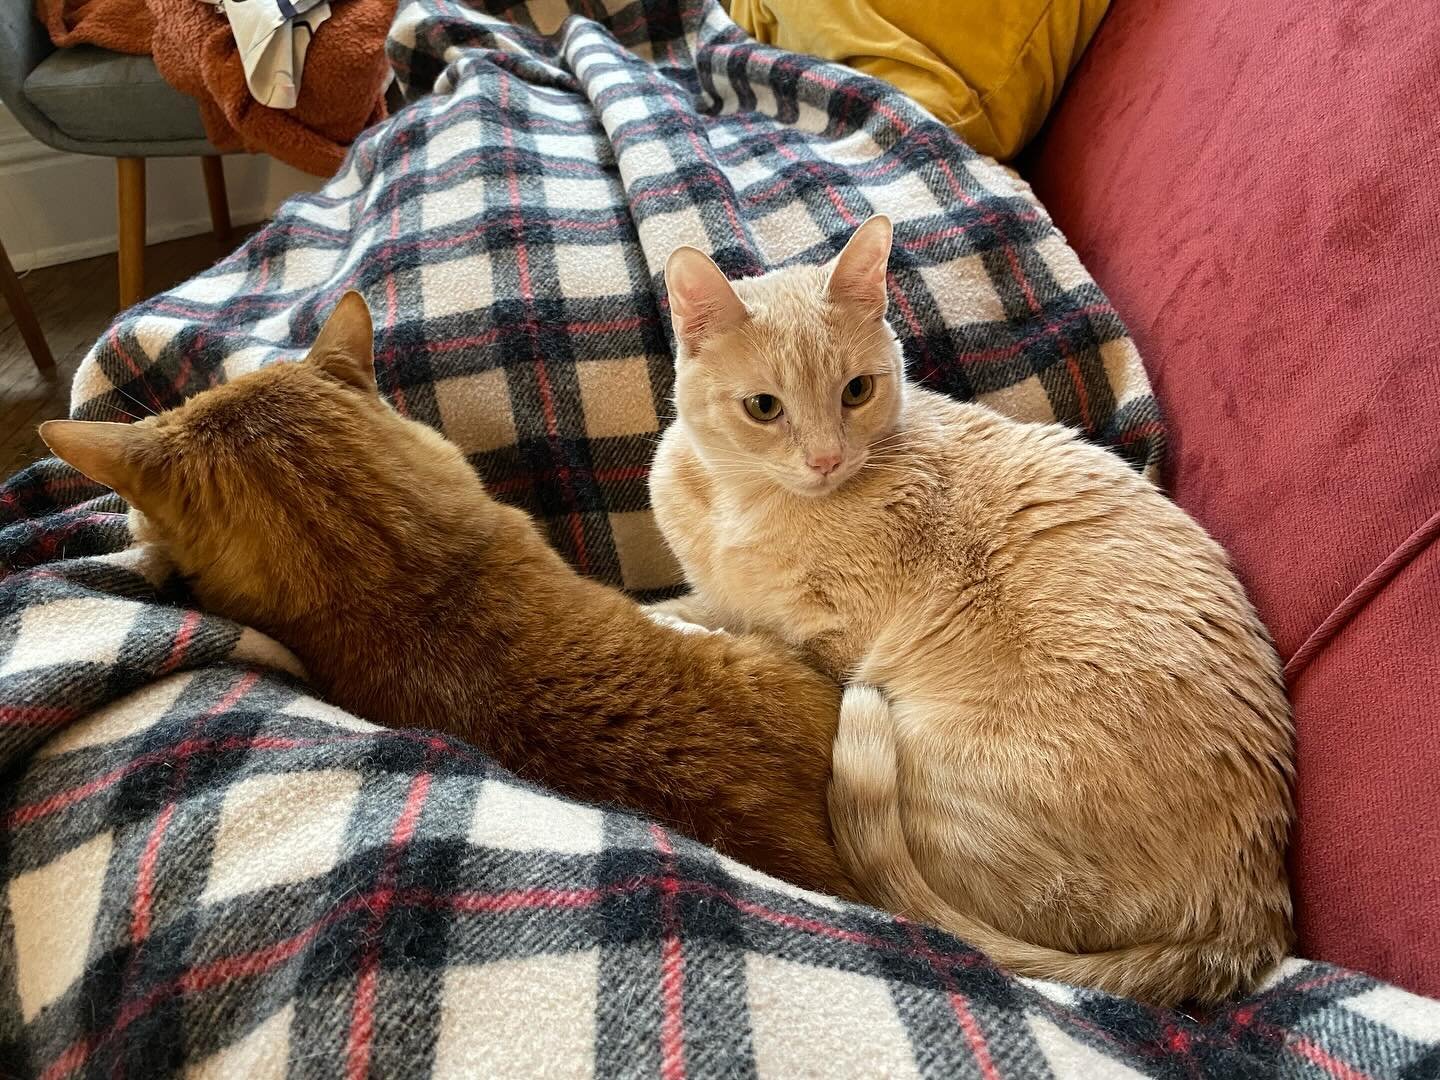 Slo-mo cuddle puddle. #catlife #orangecatsofinstagram